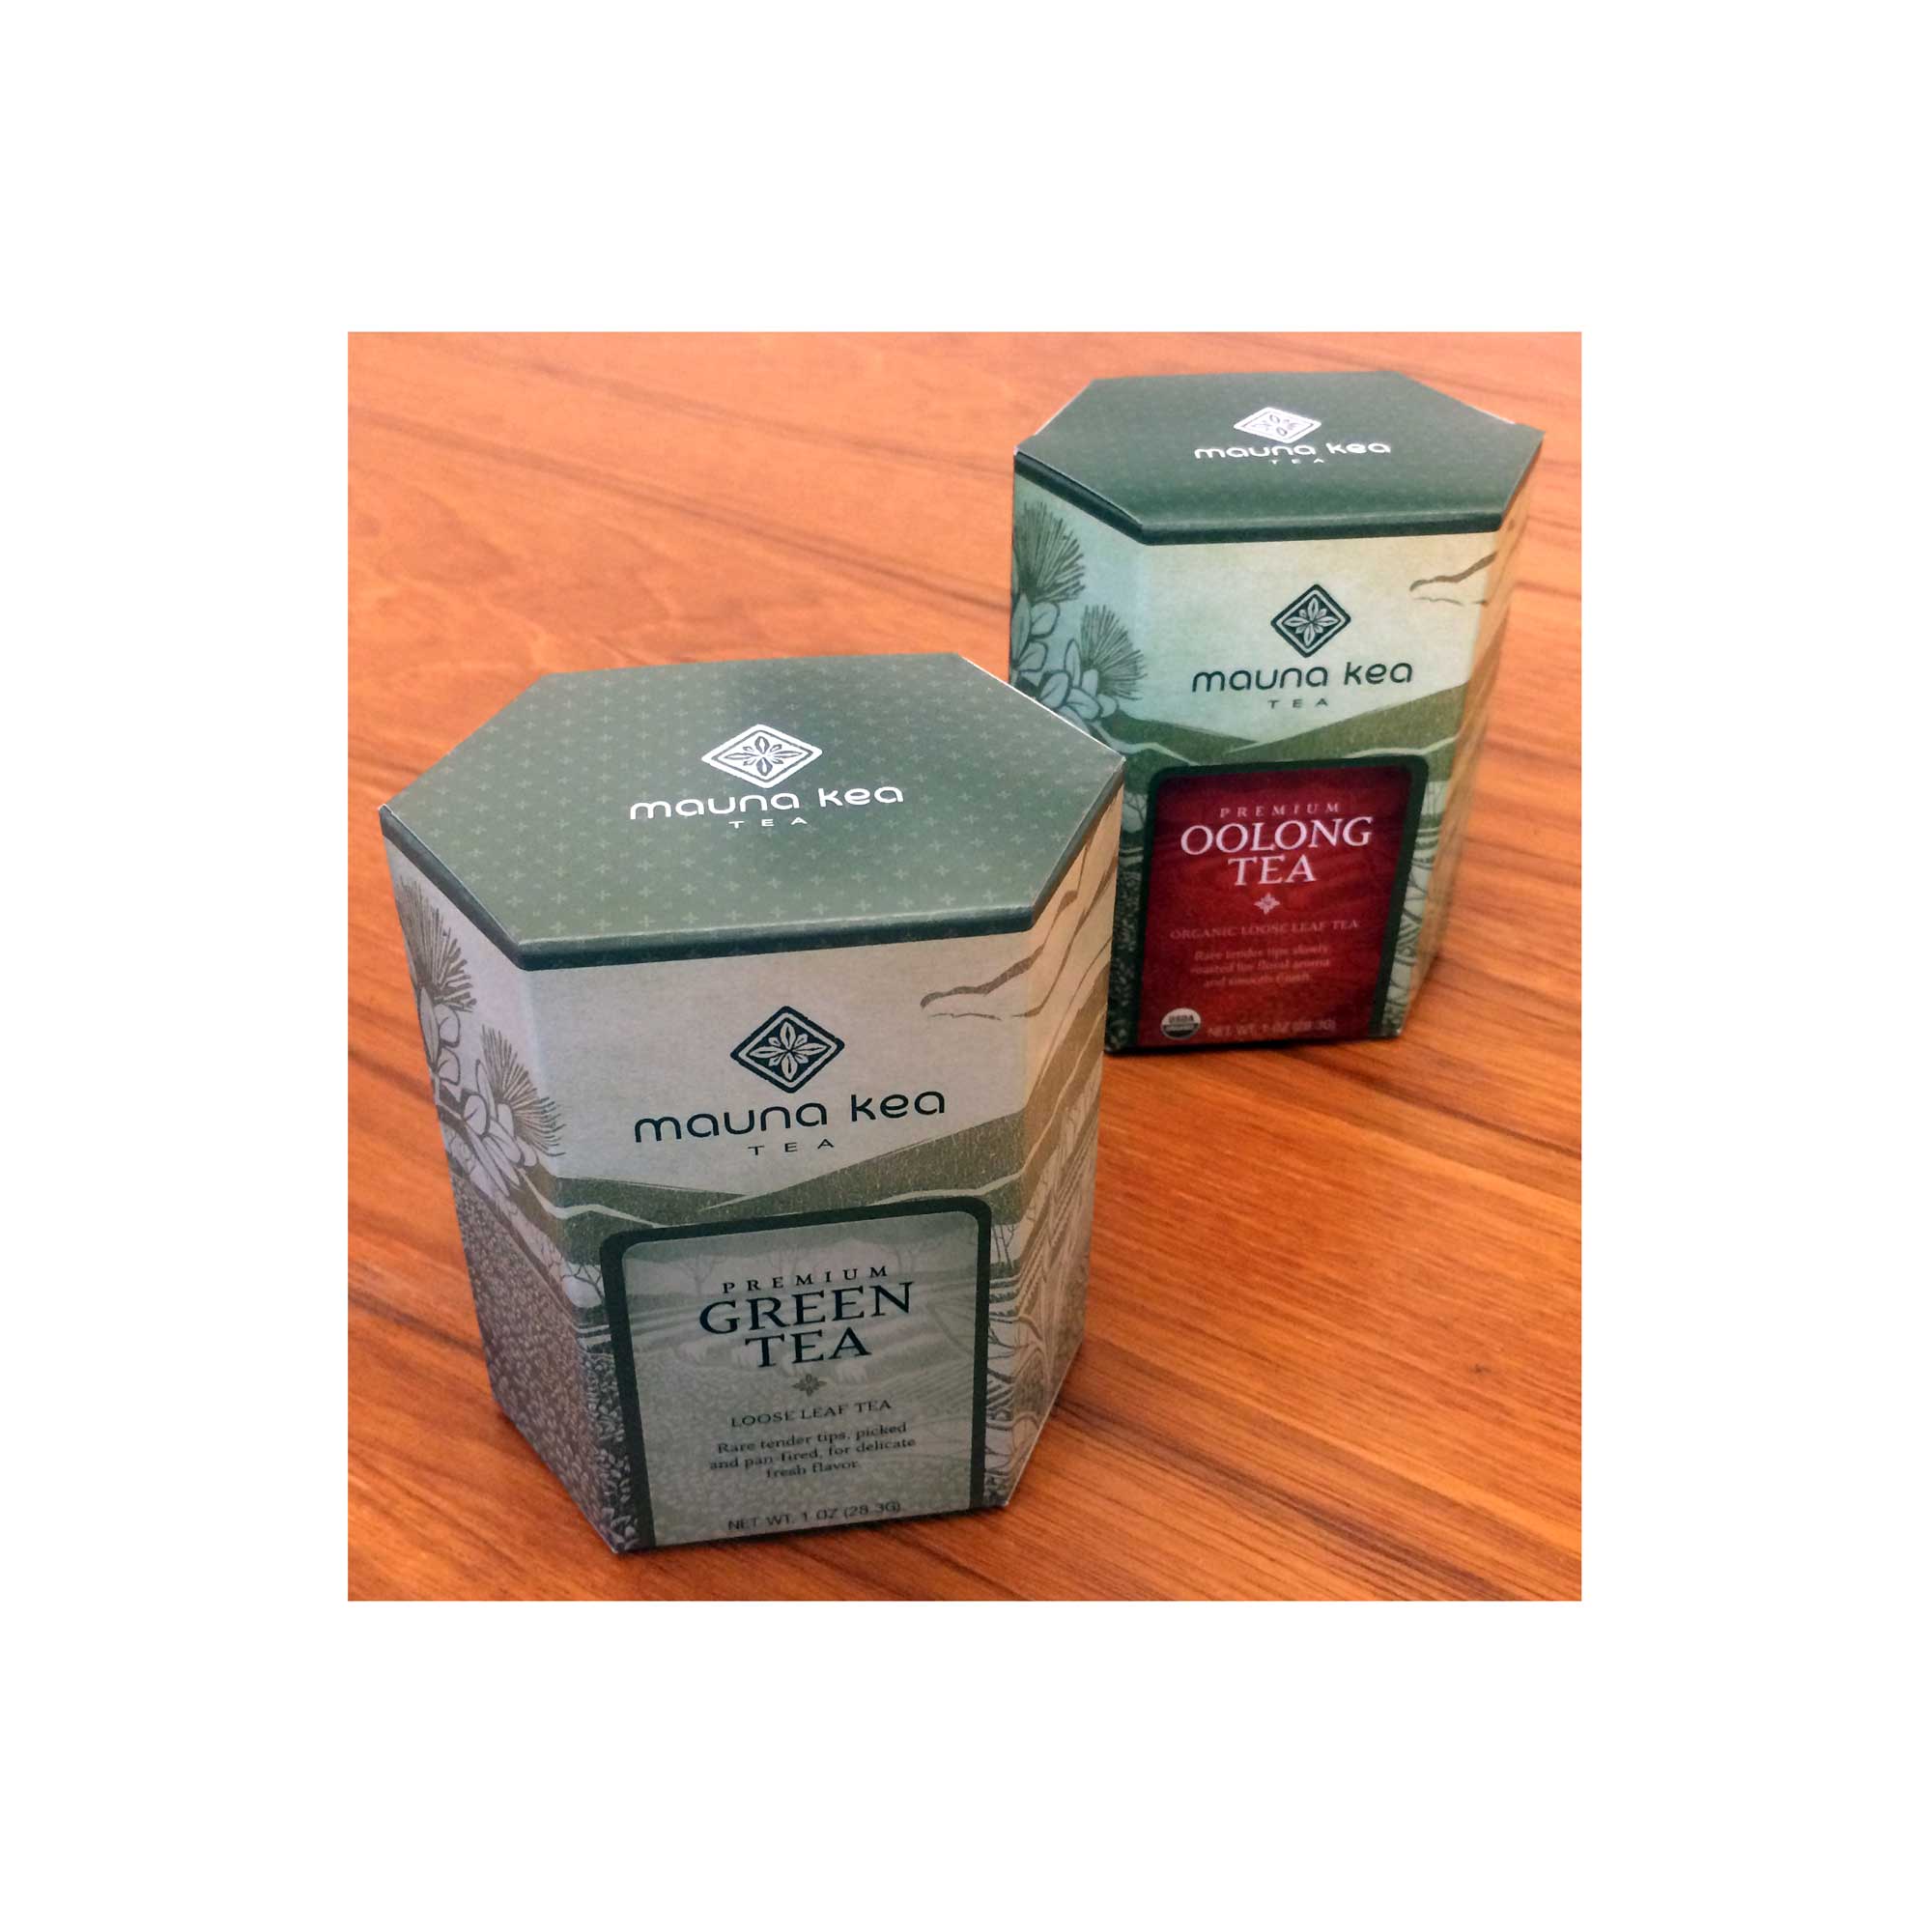 Mauna Kea Tea Packaging Design